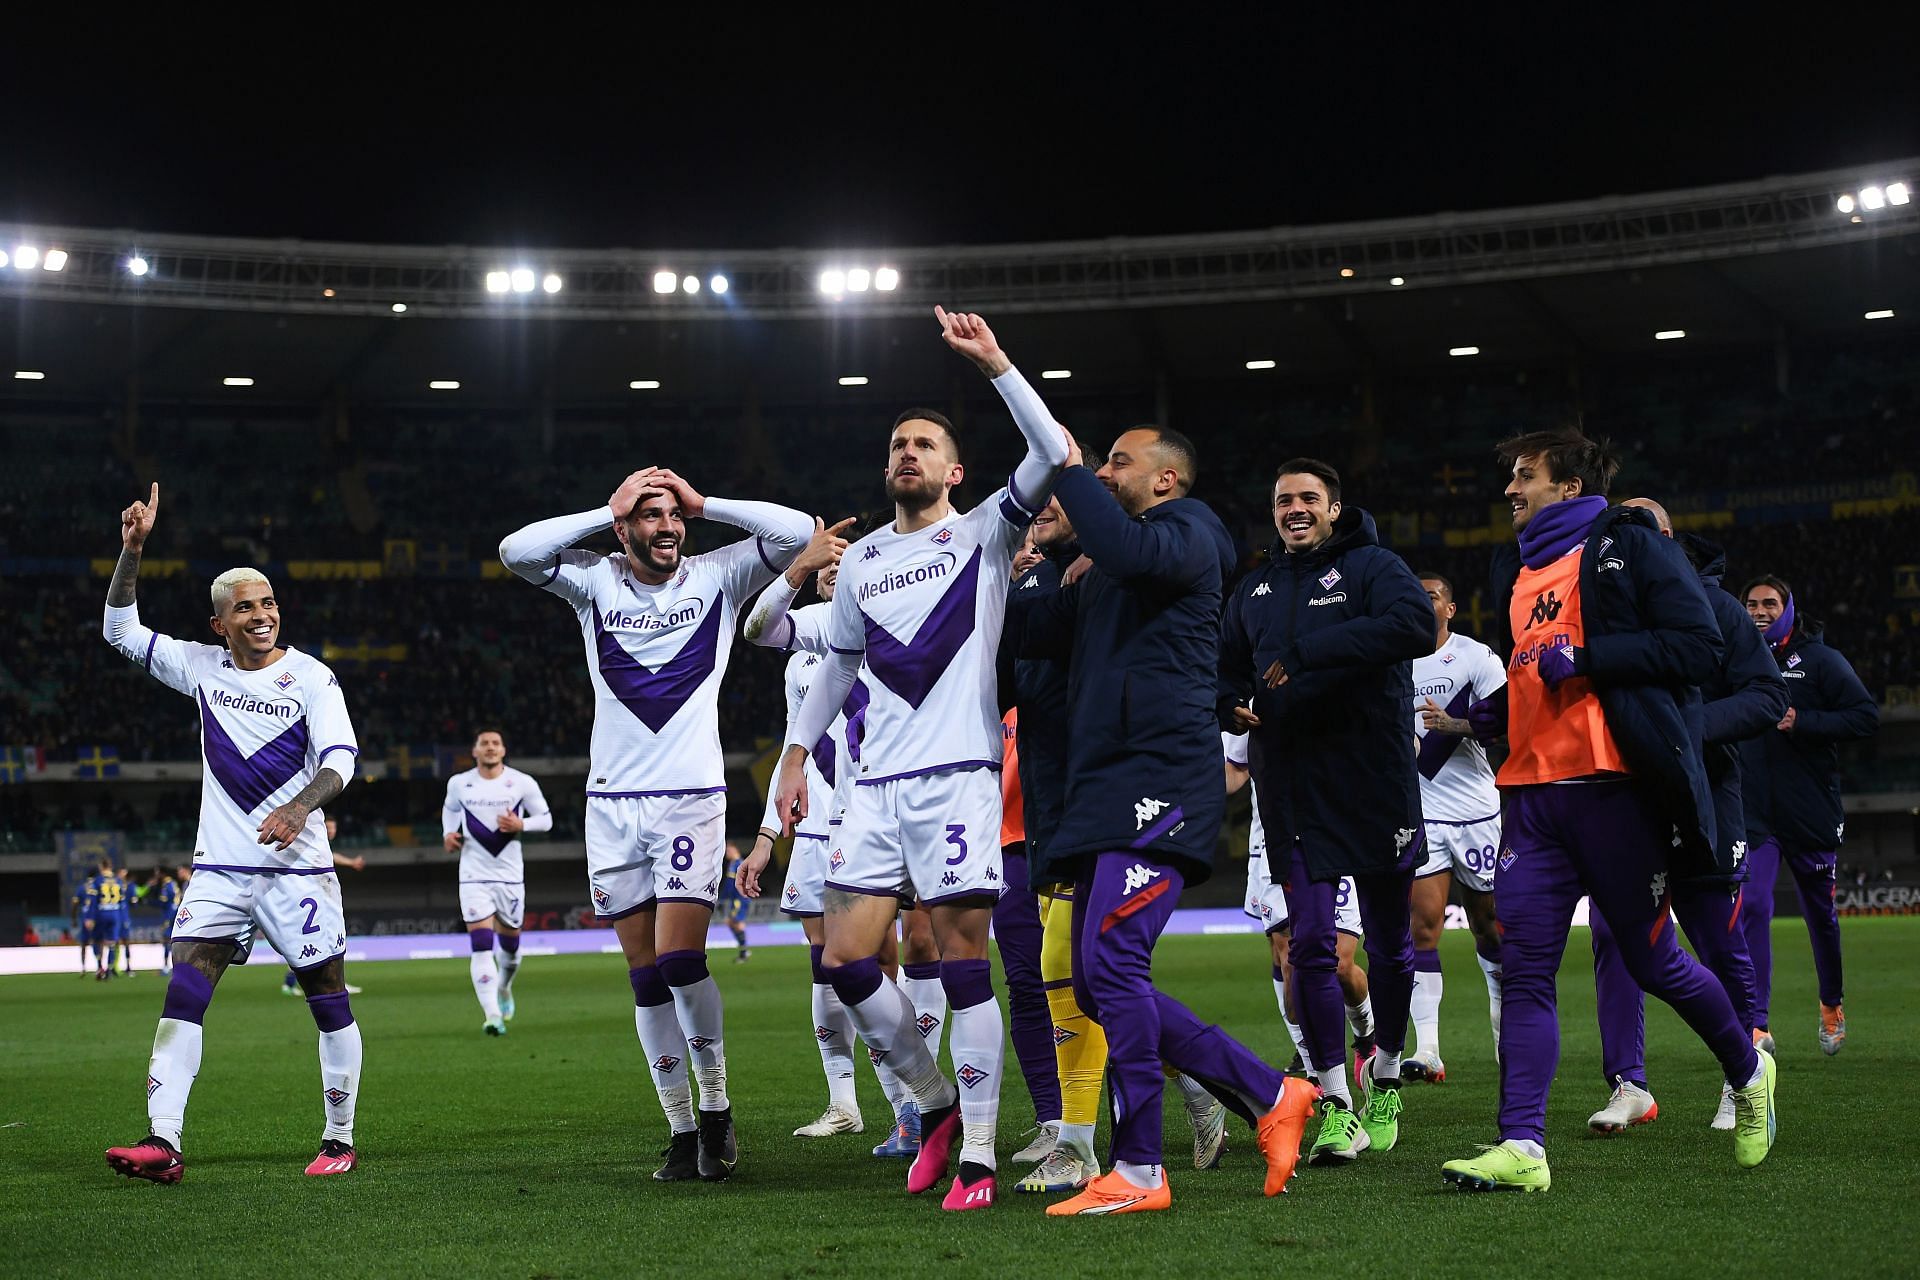 Ferencvaros vs Fiorentina Prediction and Betting Tips